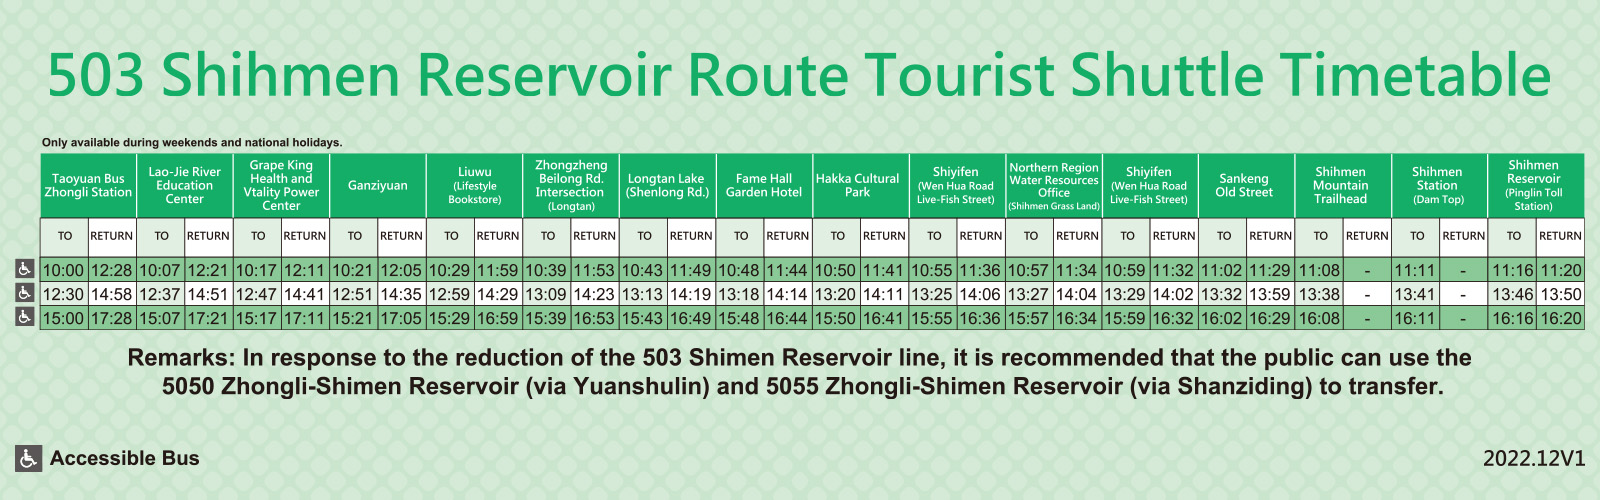 Shihmen Reservoir Route Timetable